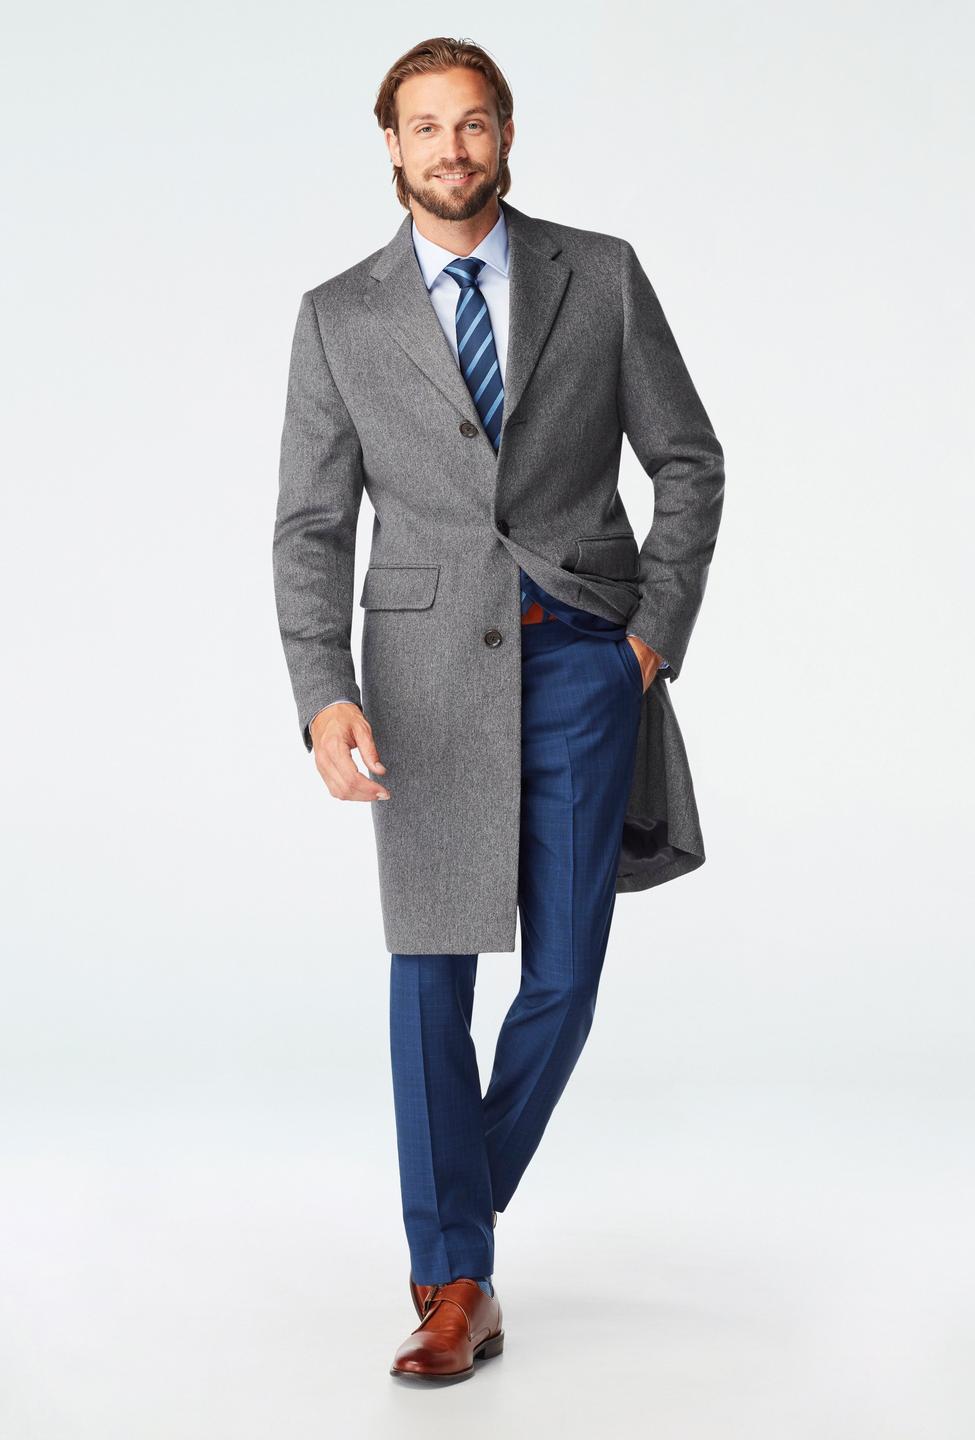 Heartford Gray Overcoat